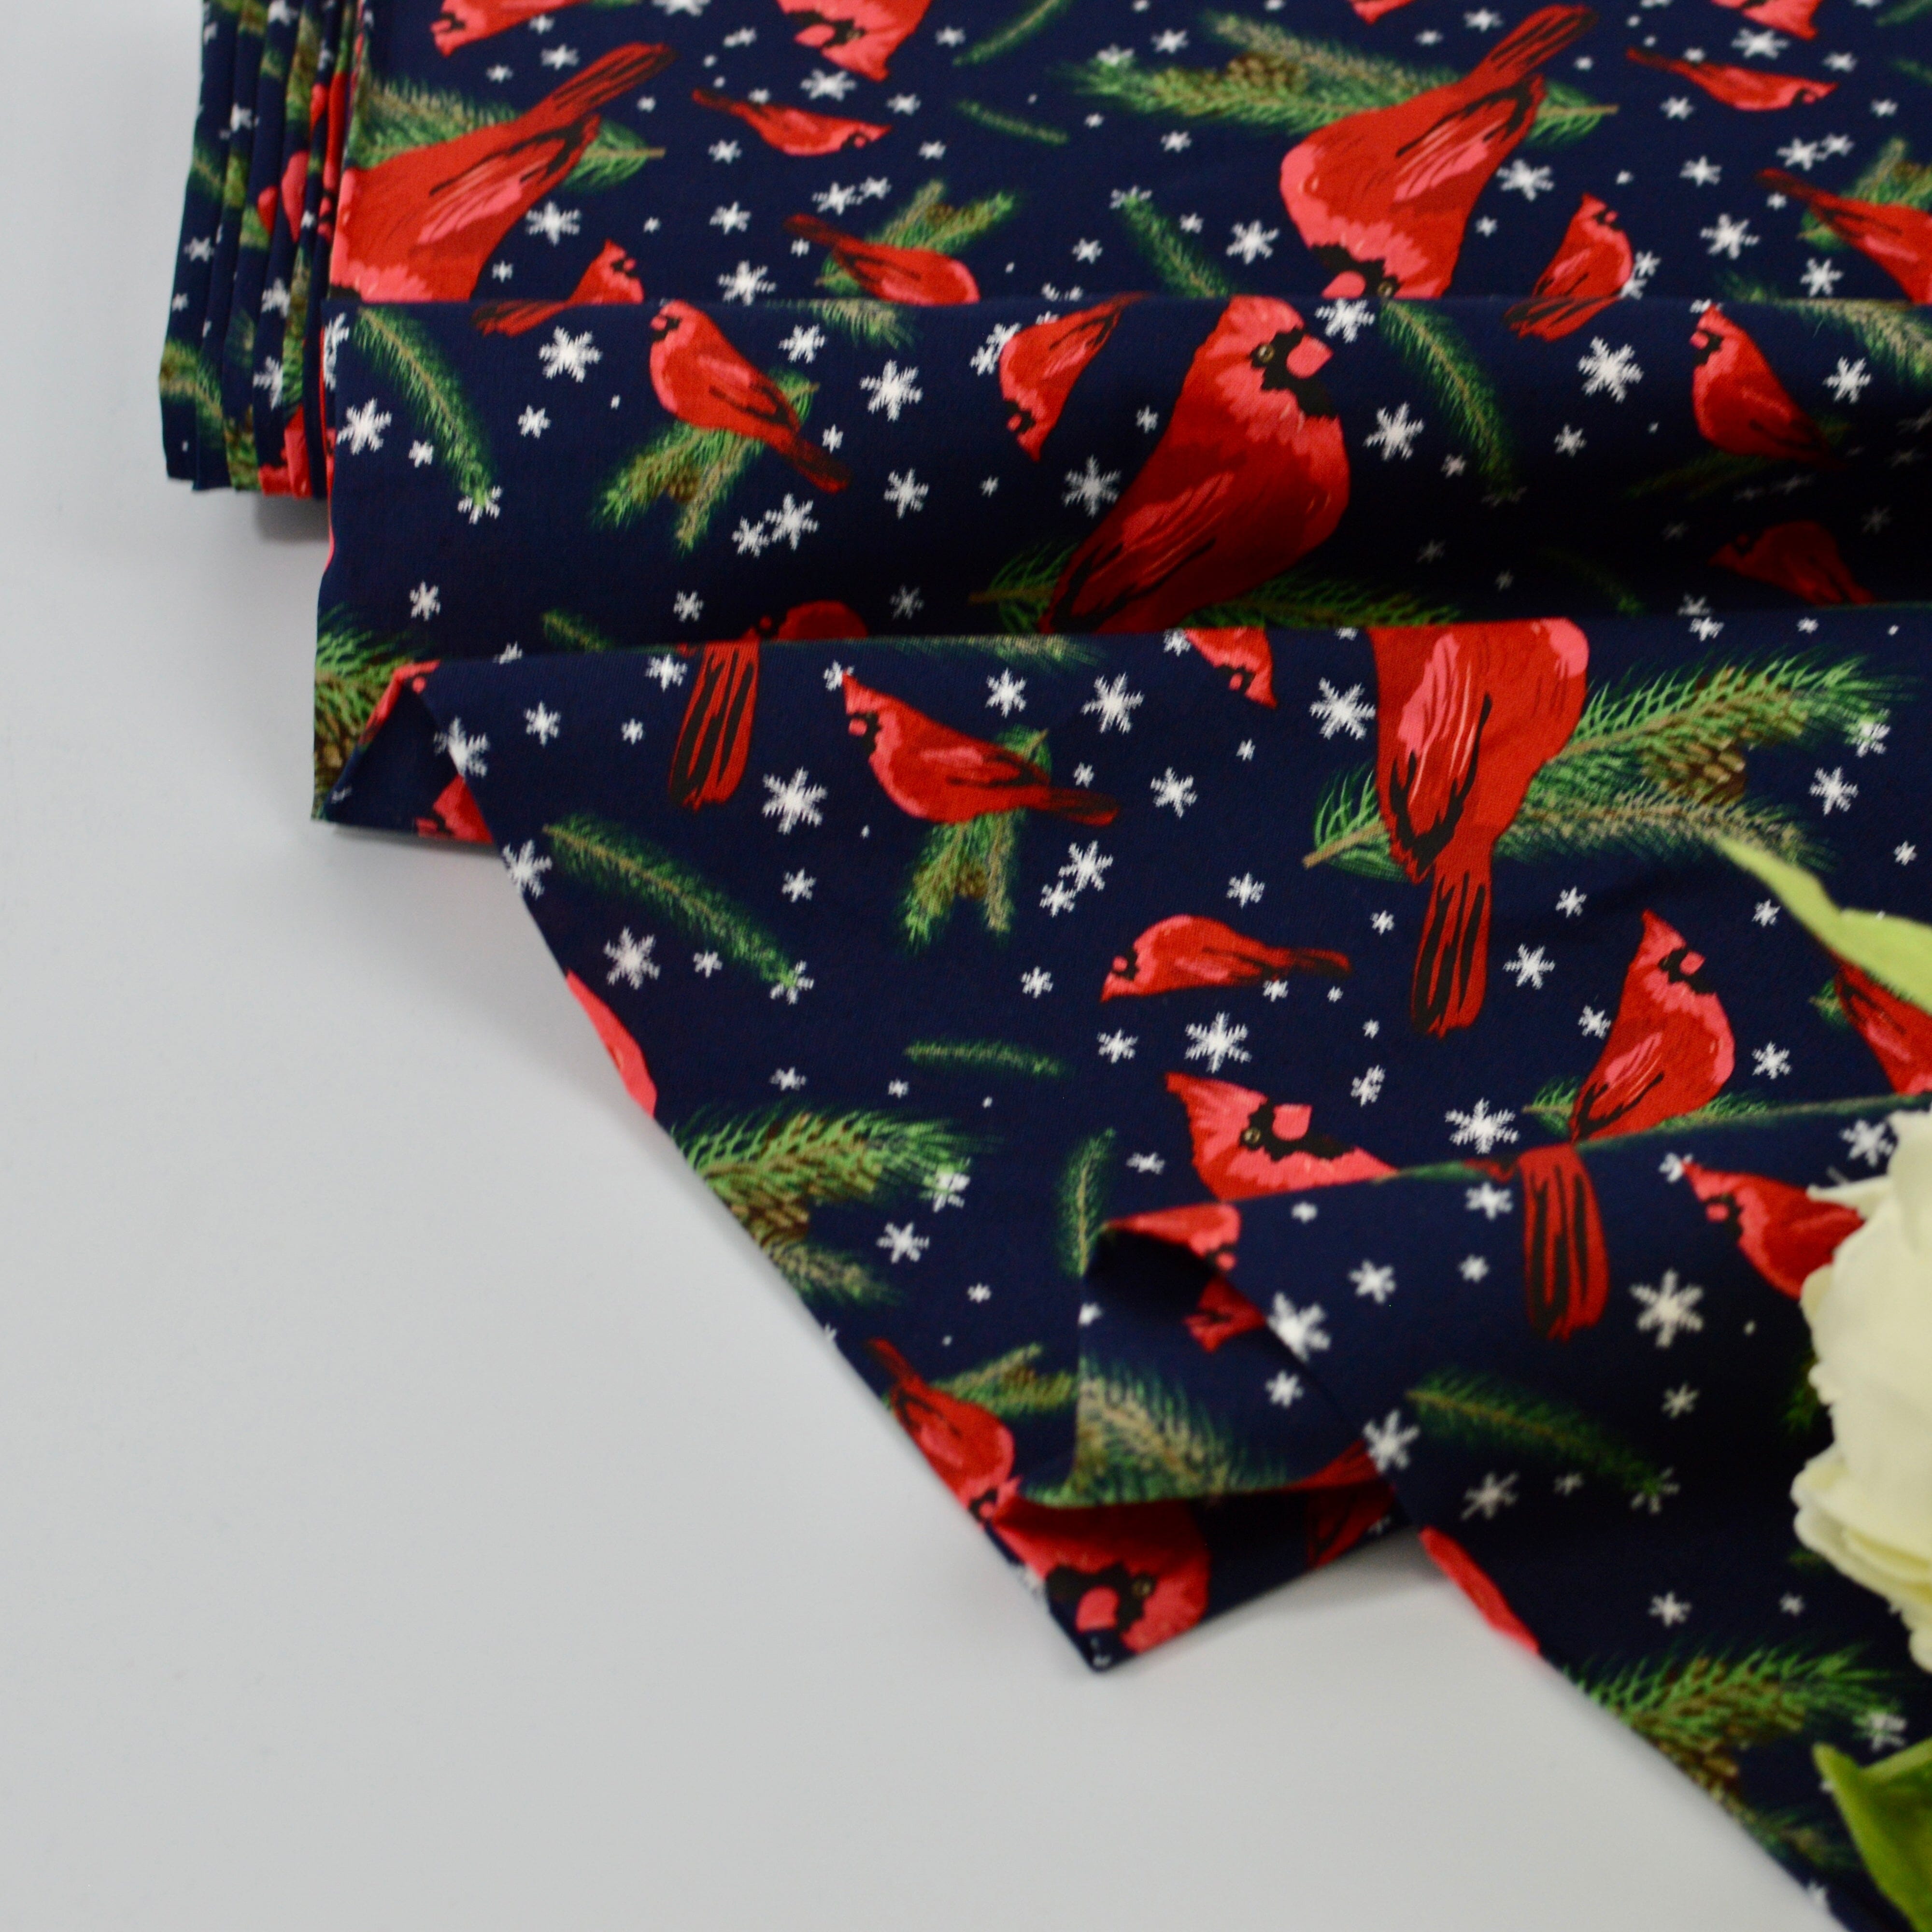 Baumwoll - Webware mit Weihnachstmuster - rote Vögel auf dunkelblau Fabric poshpinks